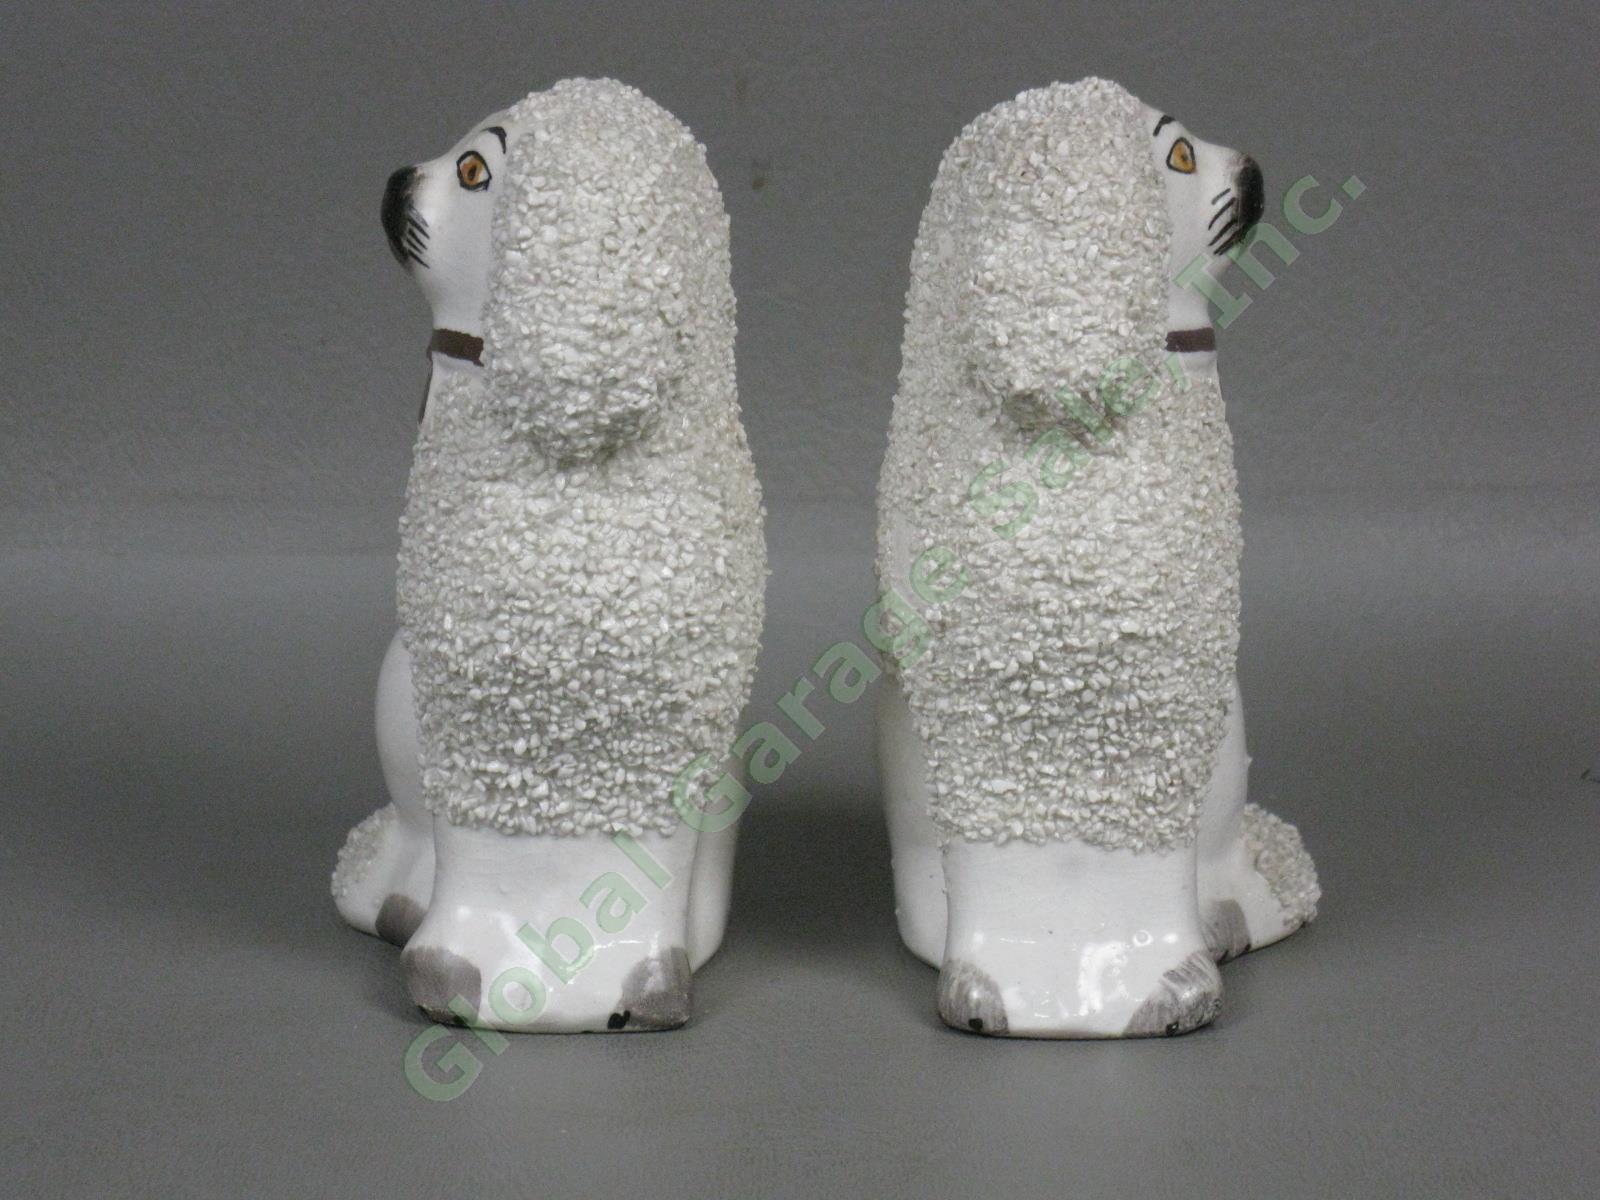 2 Vtg Antique Old Staffordshire Ware Ceramic Dog Poodle Figurines Pair England 1